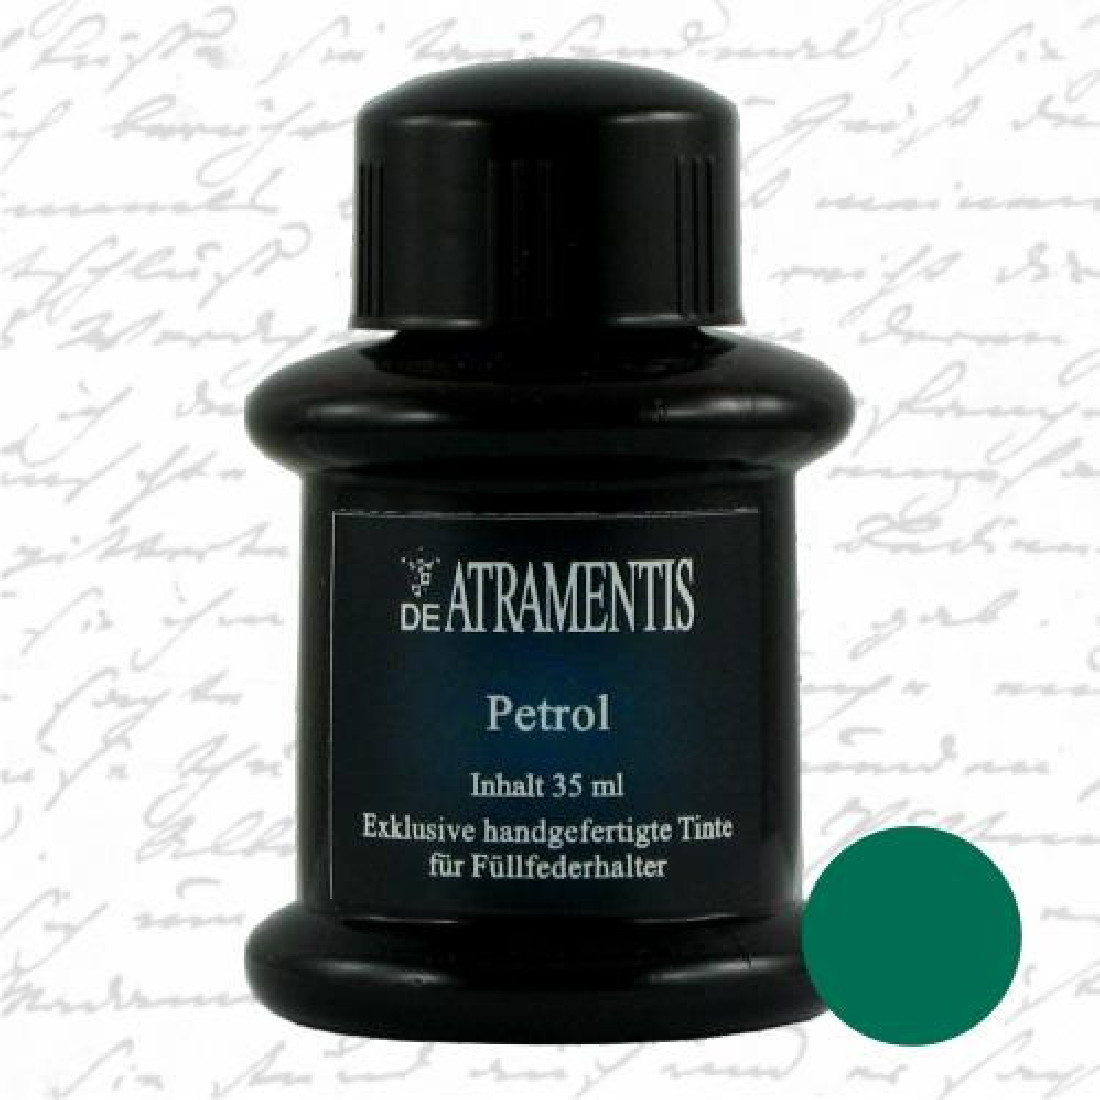 De Atramentis Petrol 45ml fountain pen standard ink